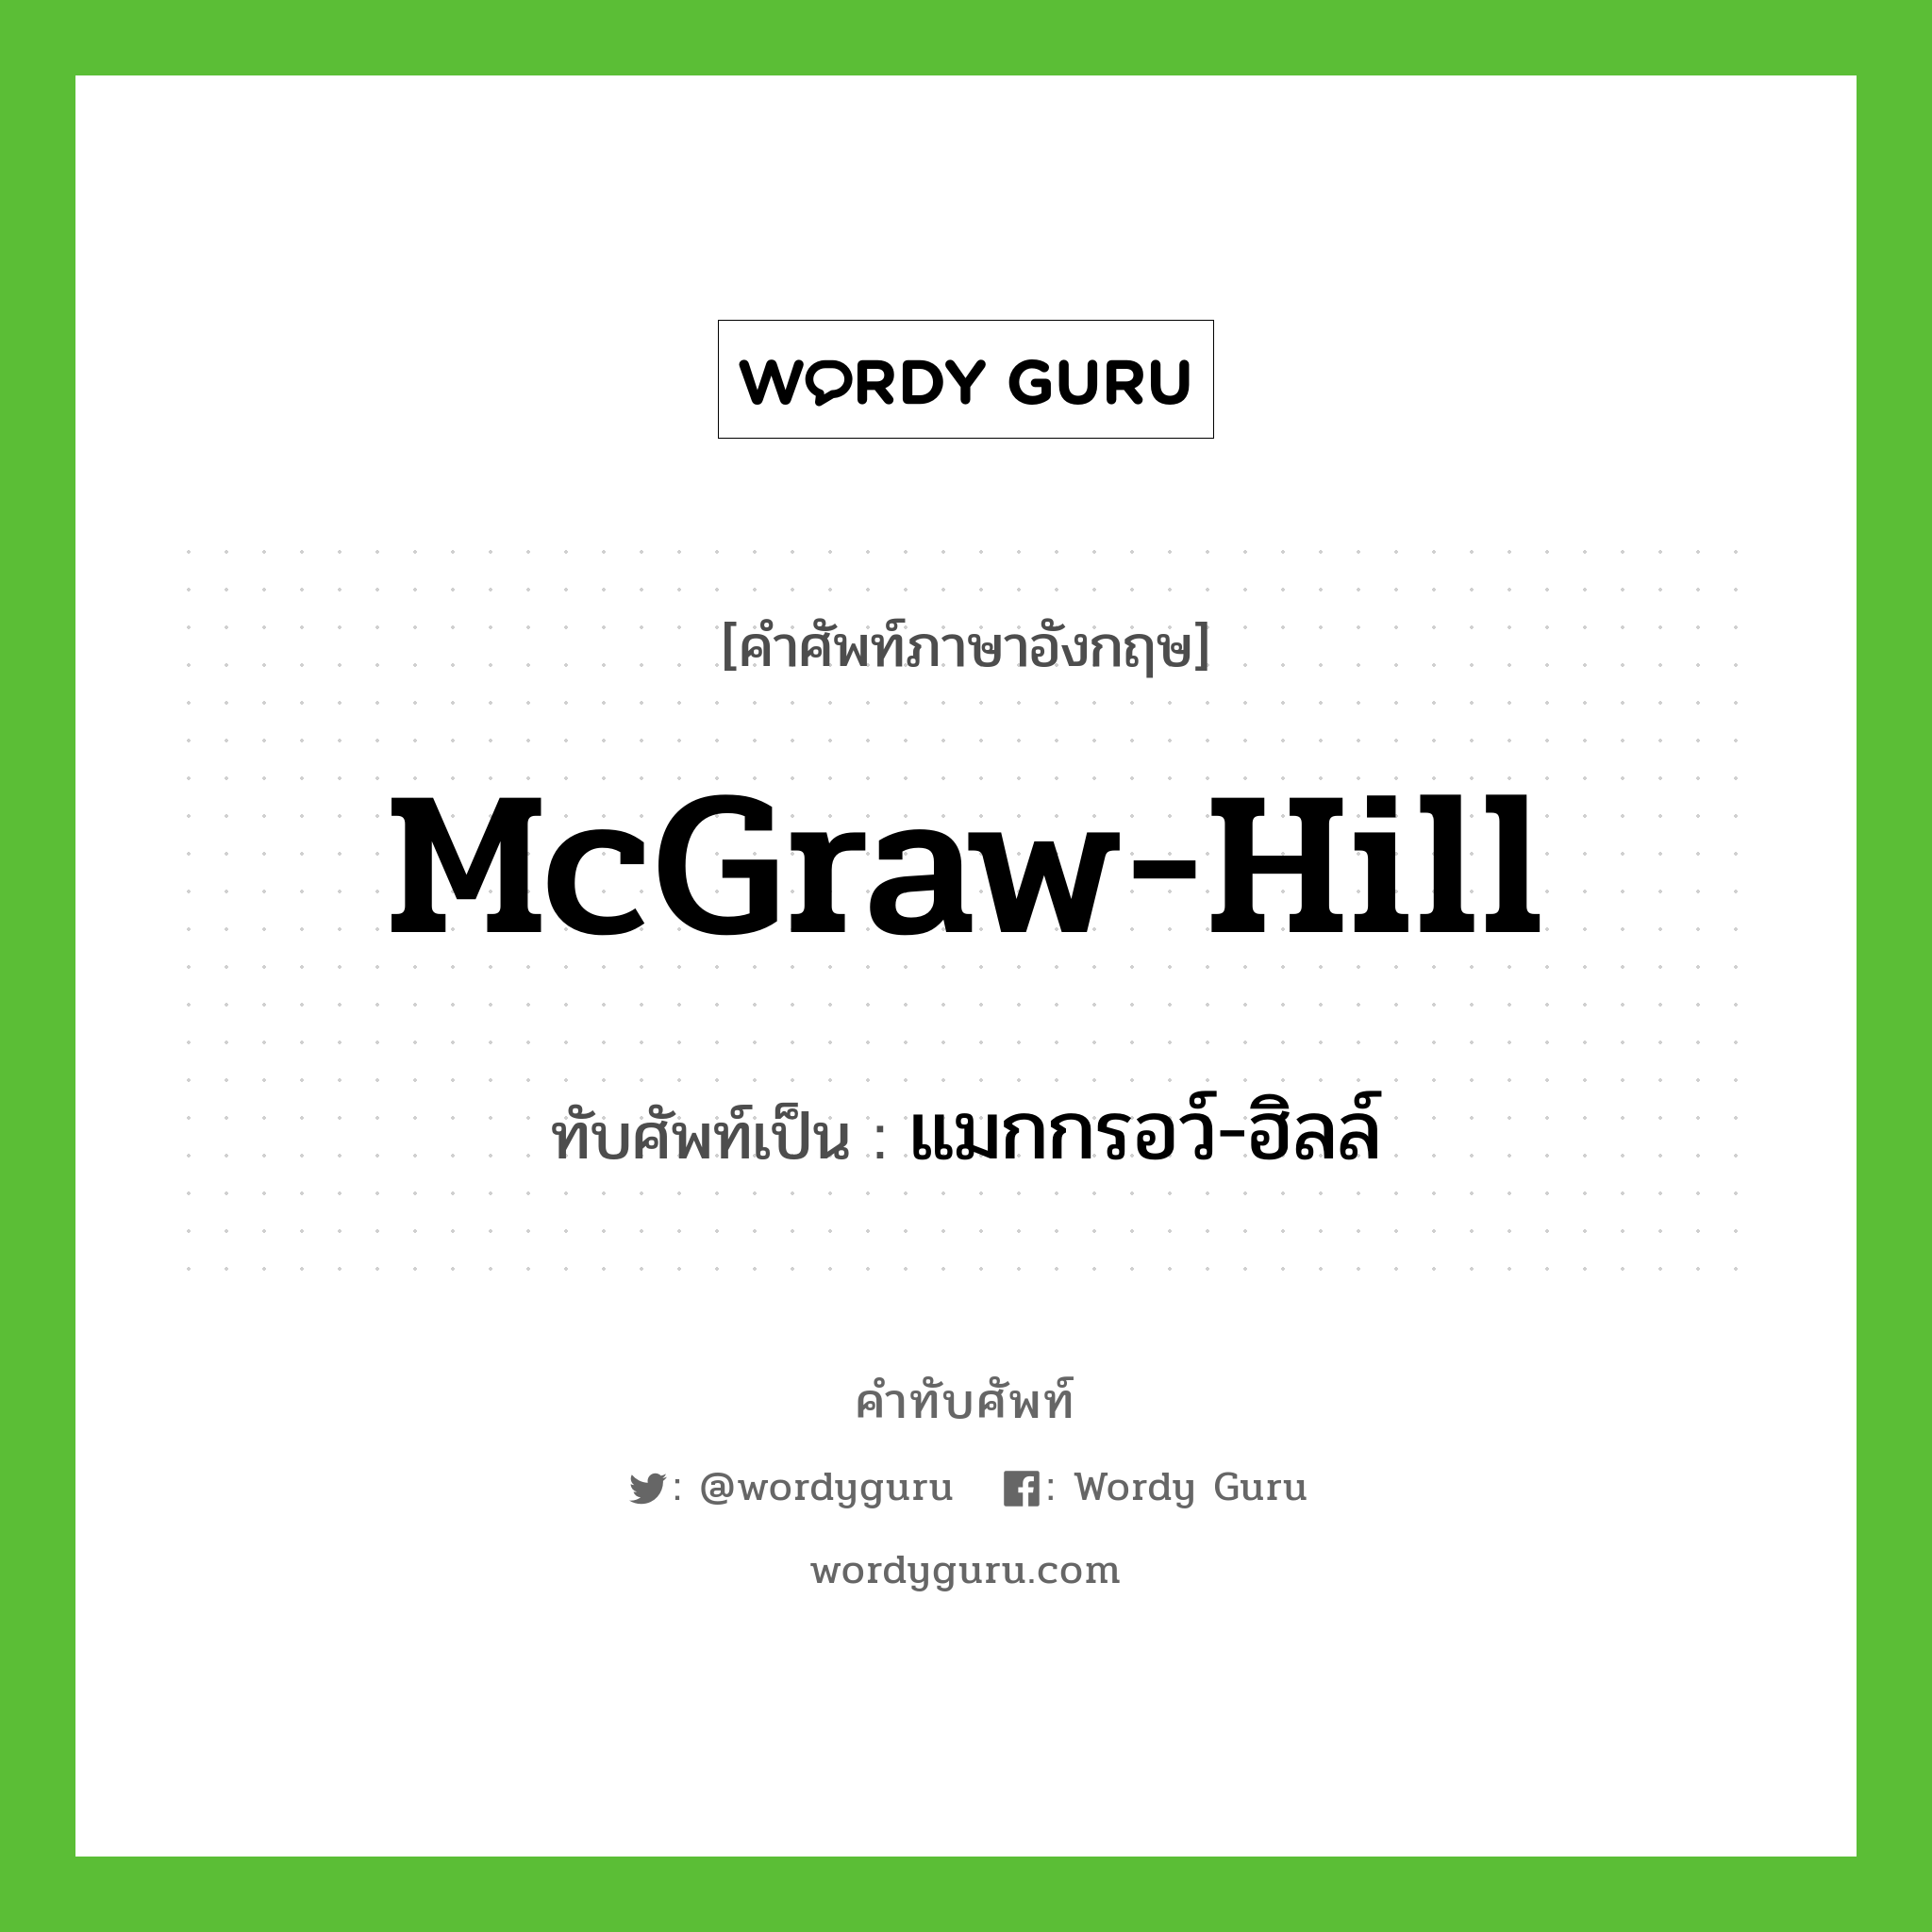 McGraw-Hill เขียนเป็นคำไทยว่าอะไร?, คำศัพท์ภาษาอังกฤษ McGraw-Hill ทับศัพท์เป็น แมกกรอว์-ฮิลล์